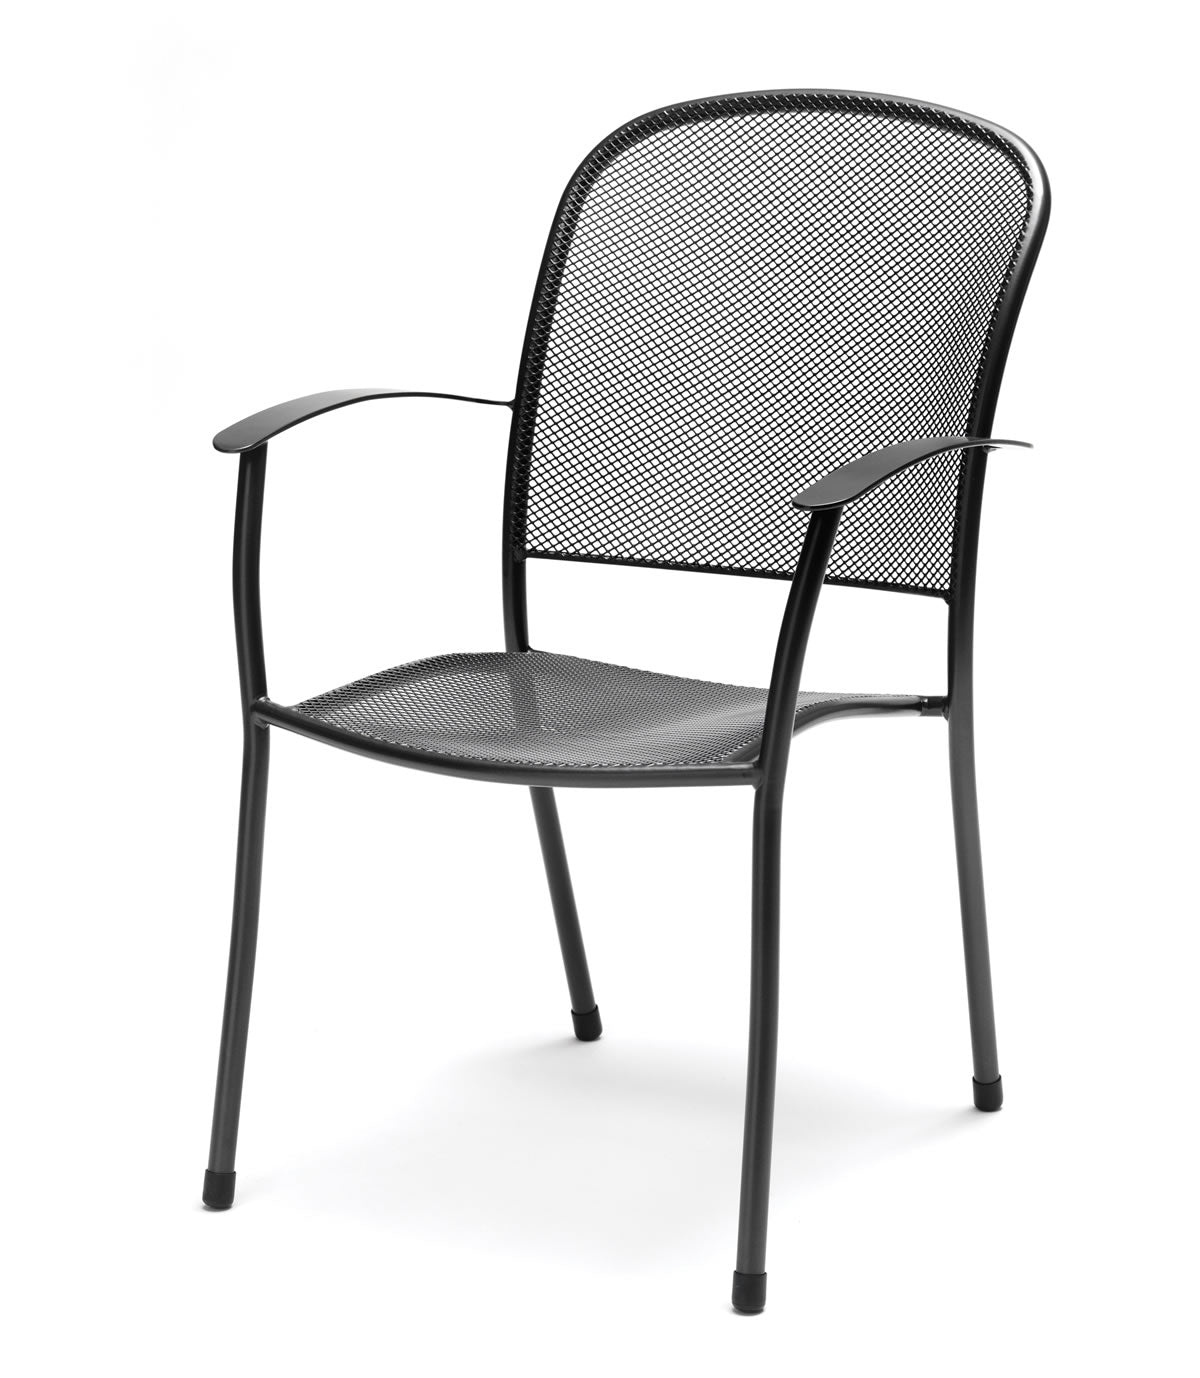 Kettler Caredo Outdoor Dining Chair